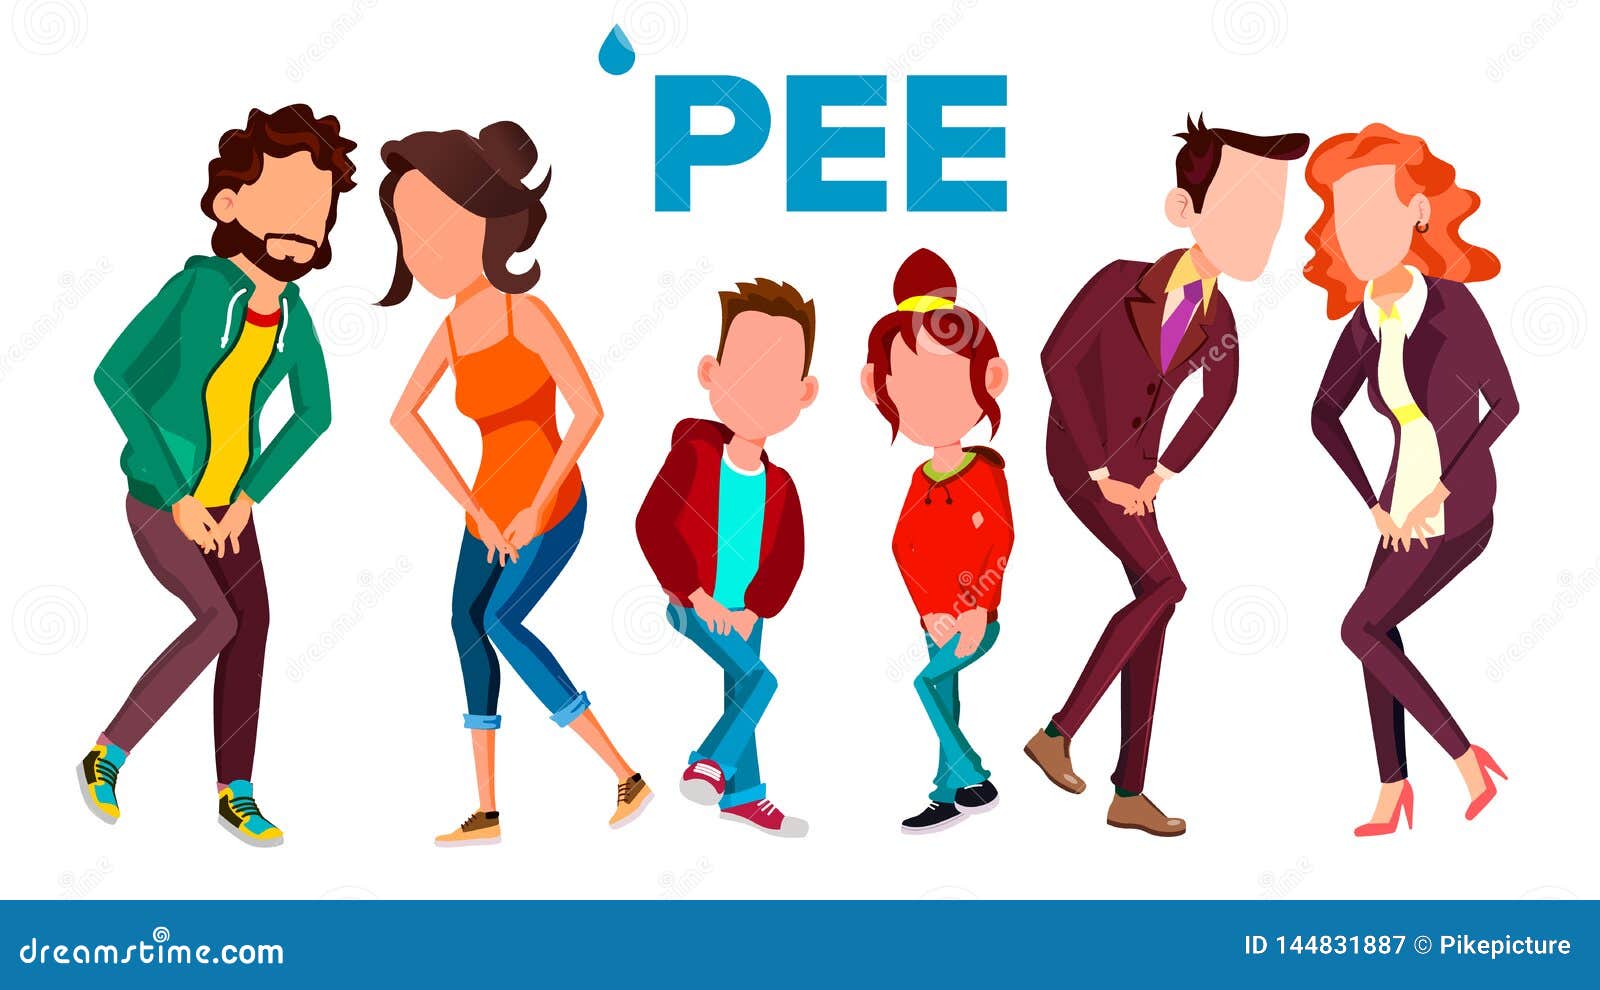 Pee Holding Contest